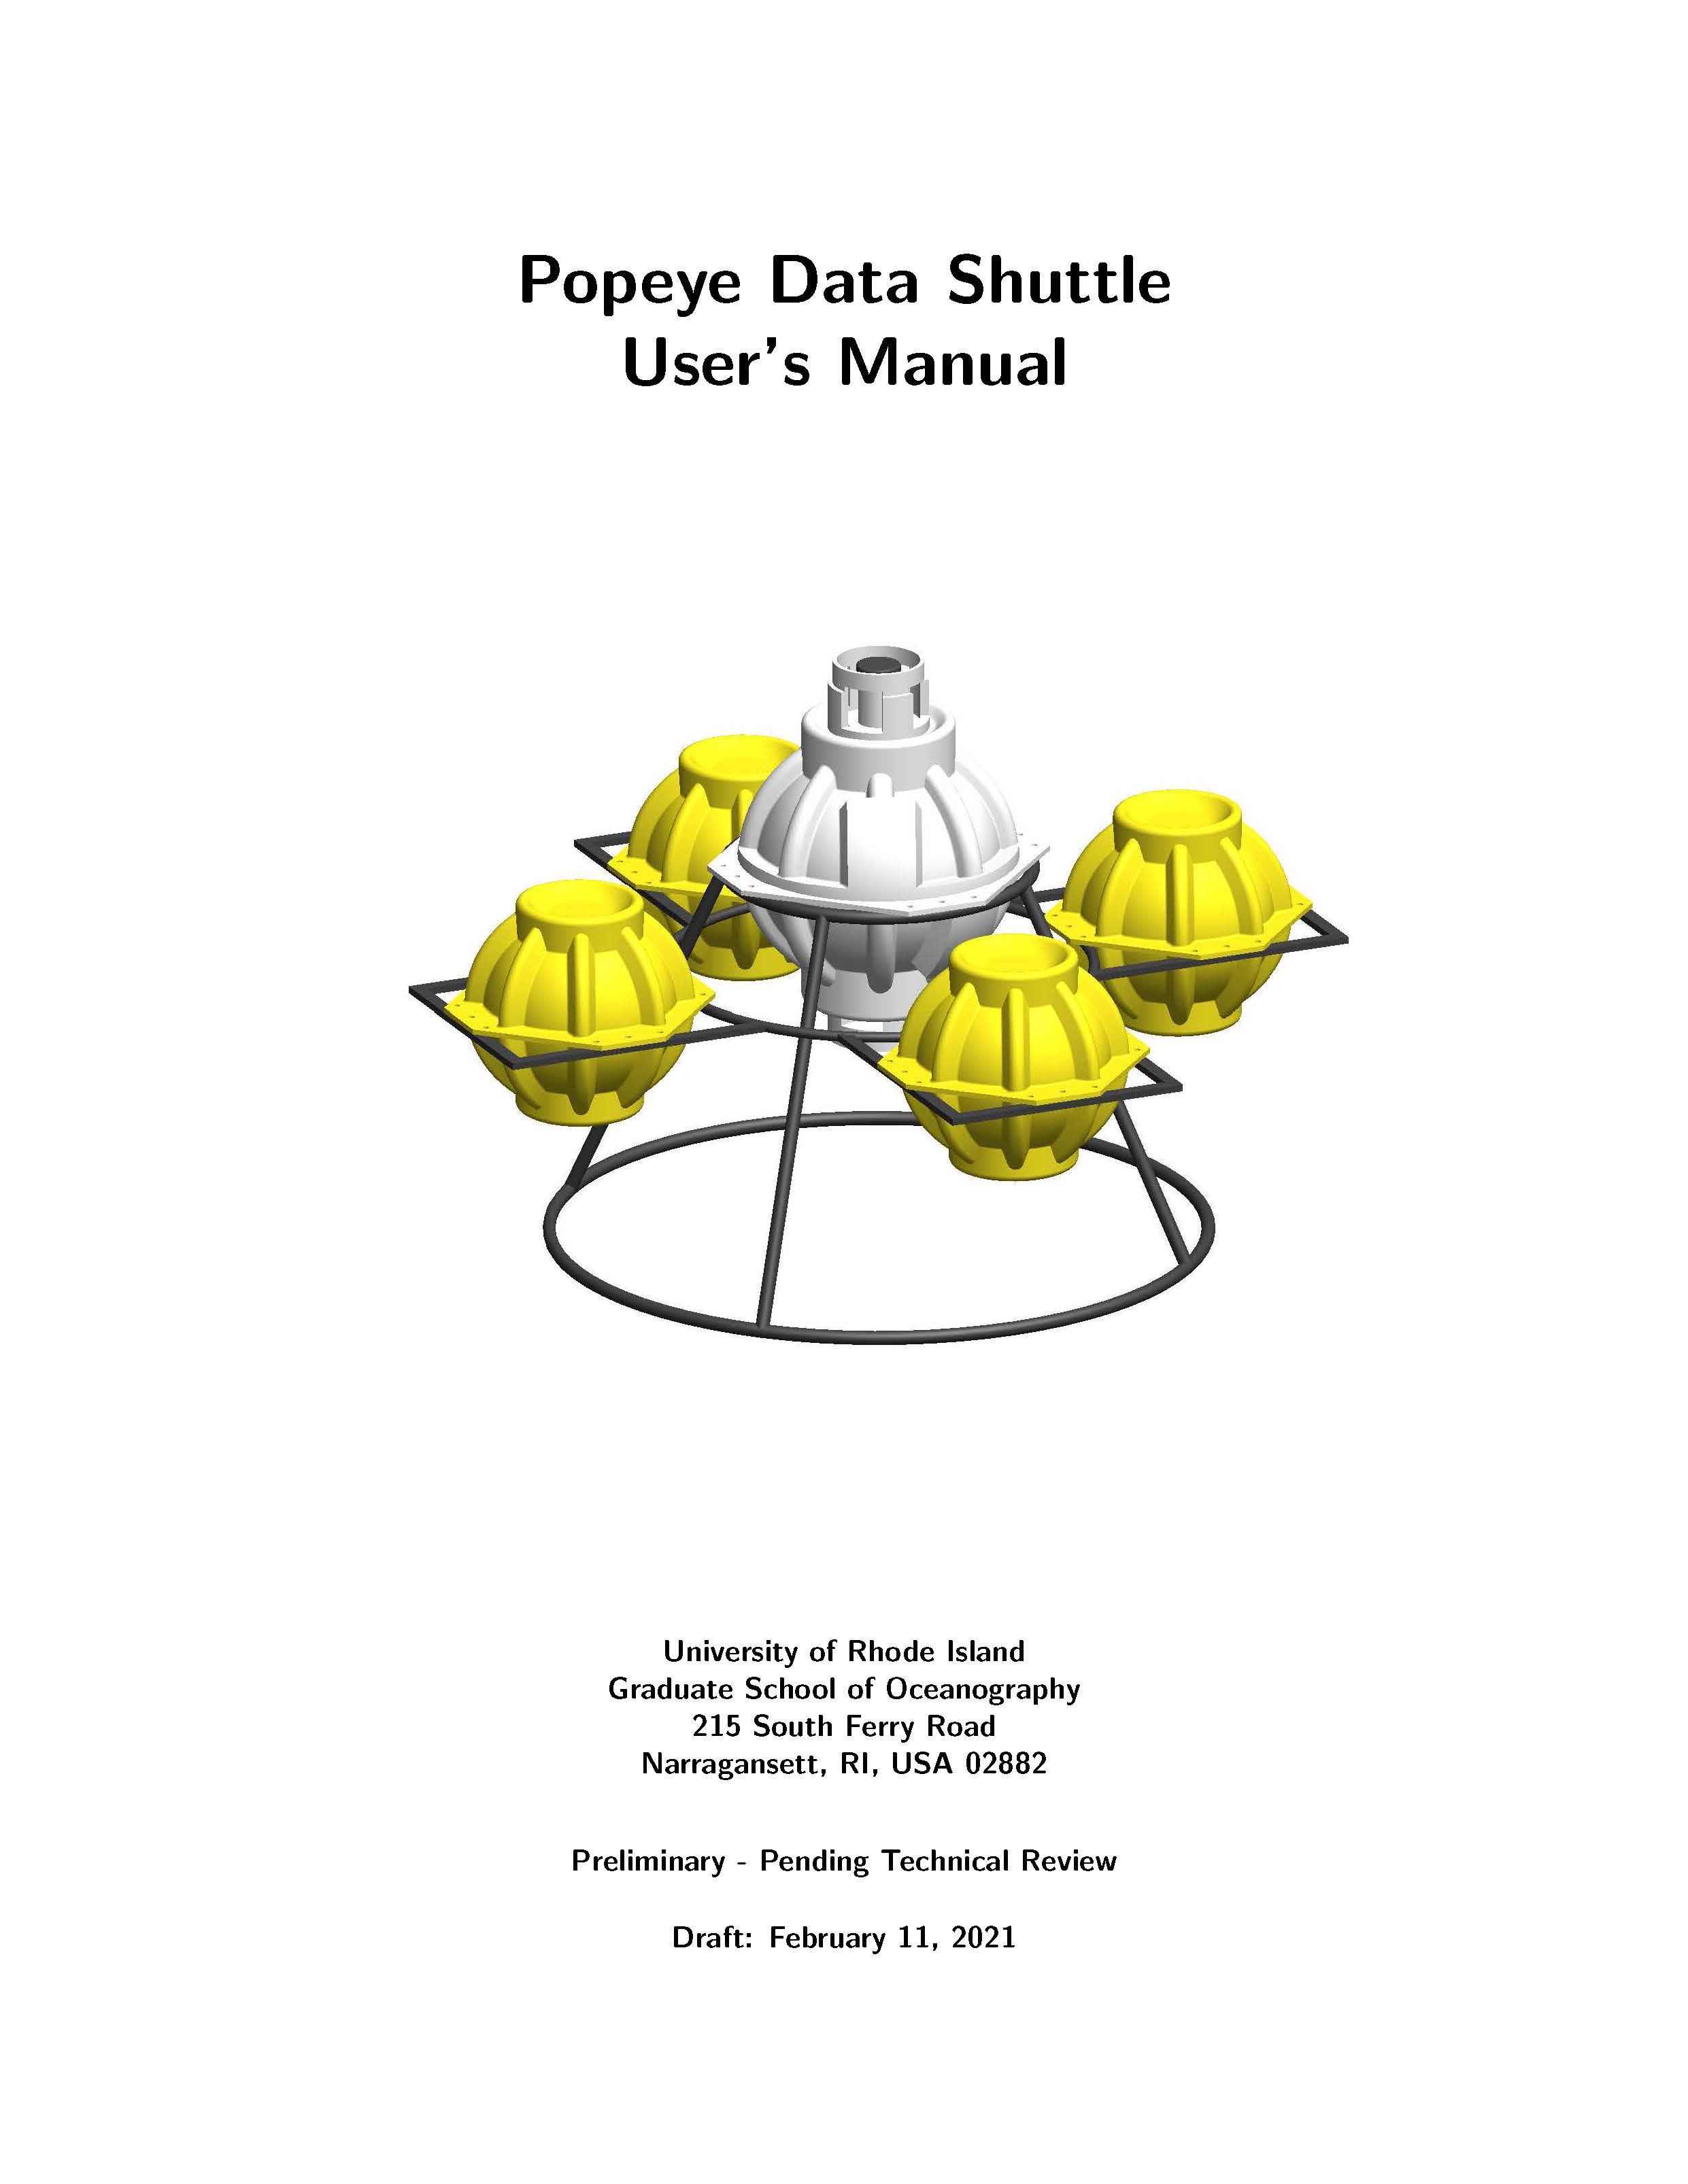 Popeye Data Shuttle User's Manual